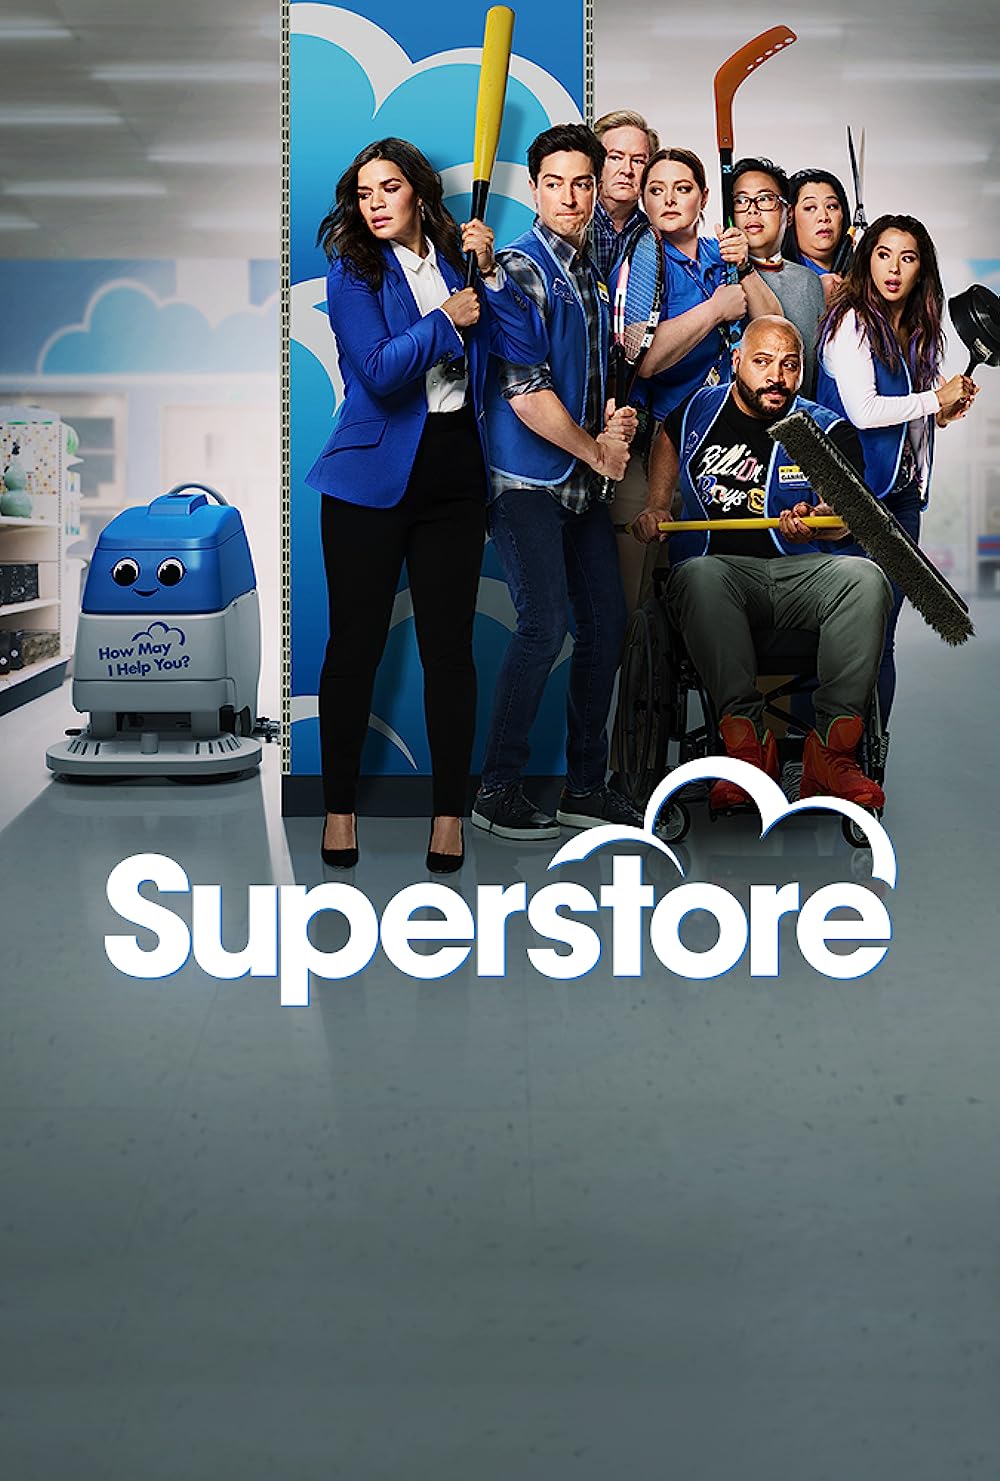 Superstore Season 2 DVD Release Date | Redbox, Netflix, iTunes, Amazon